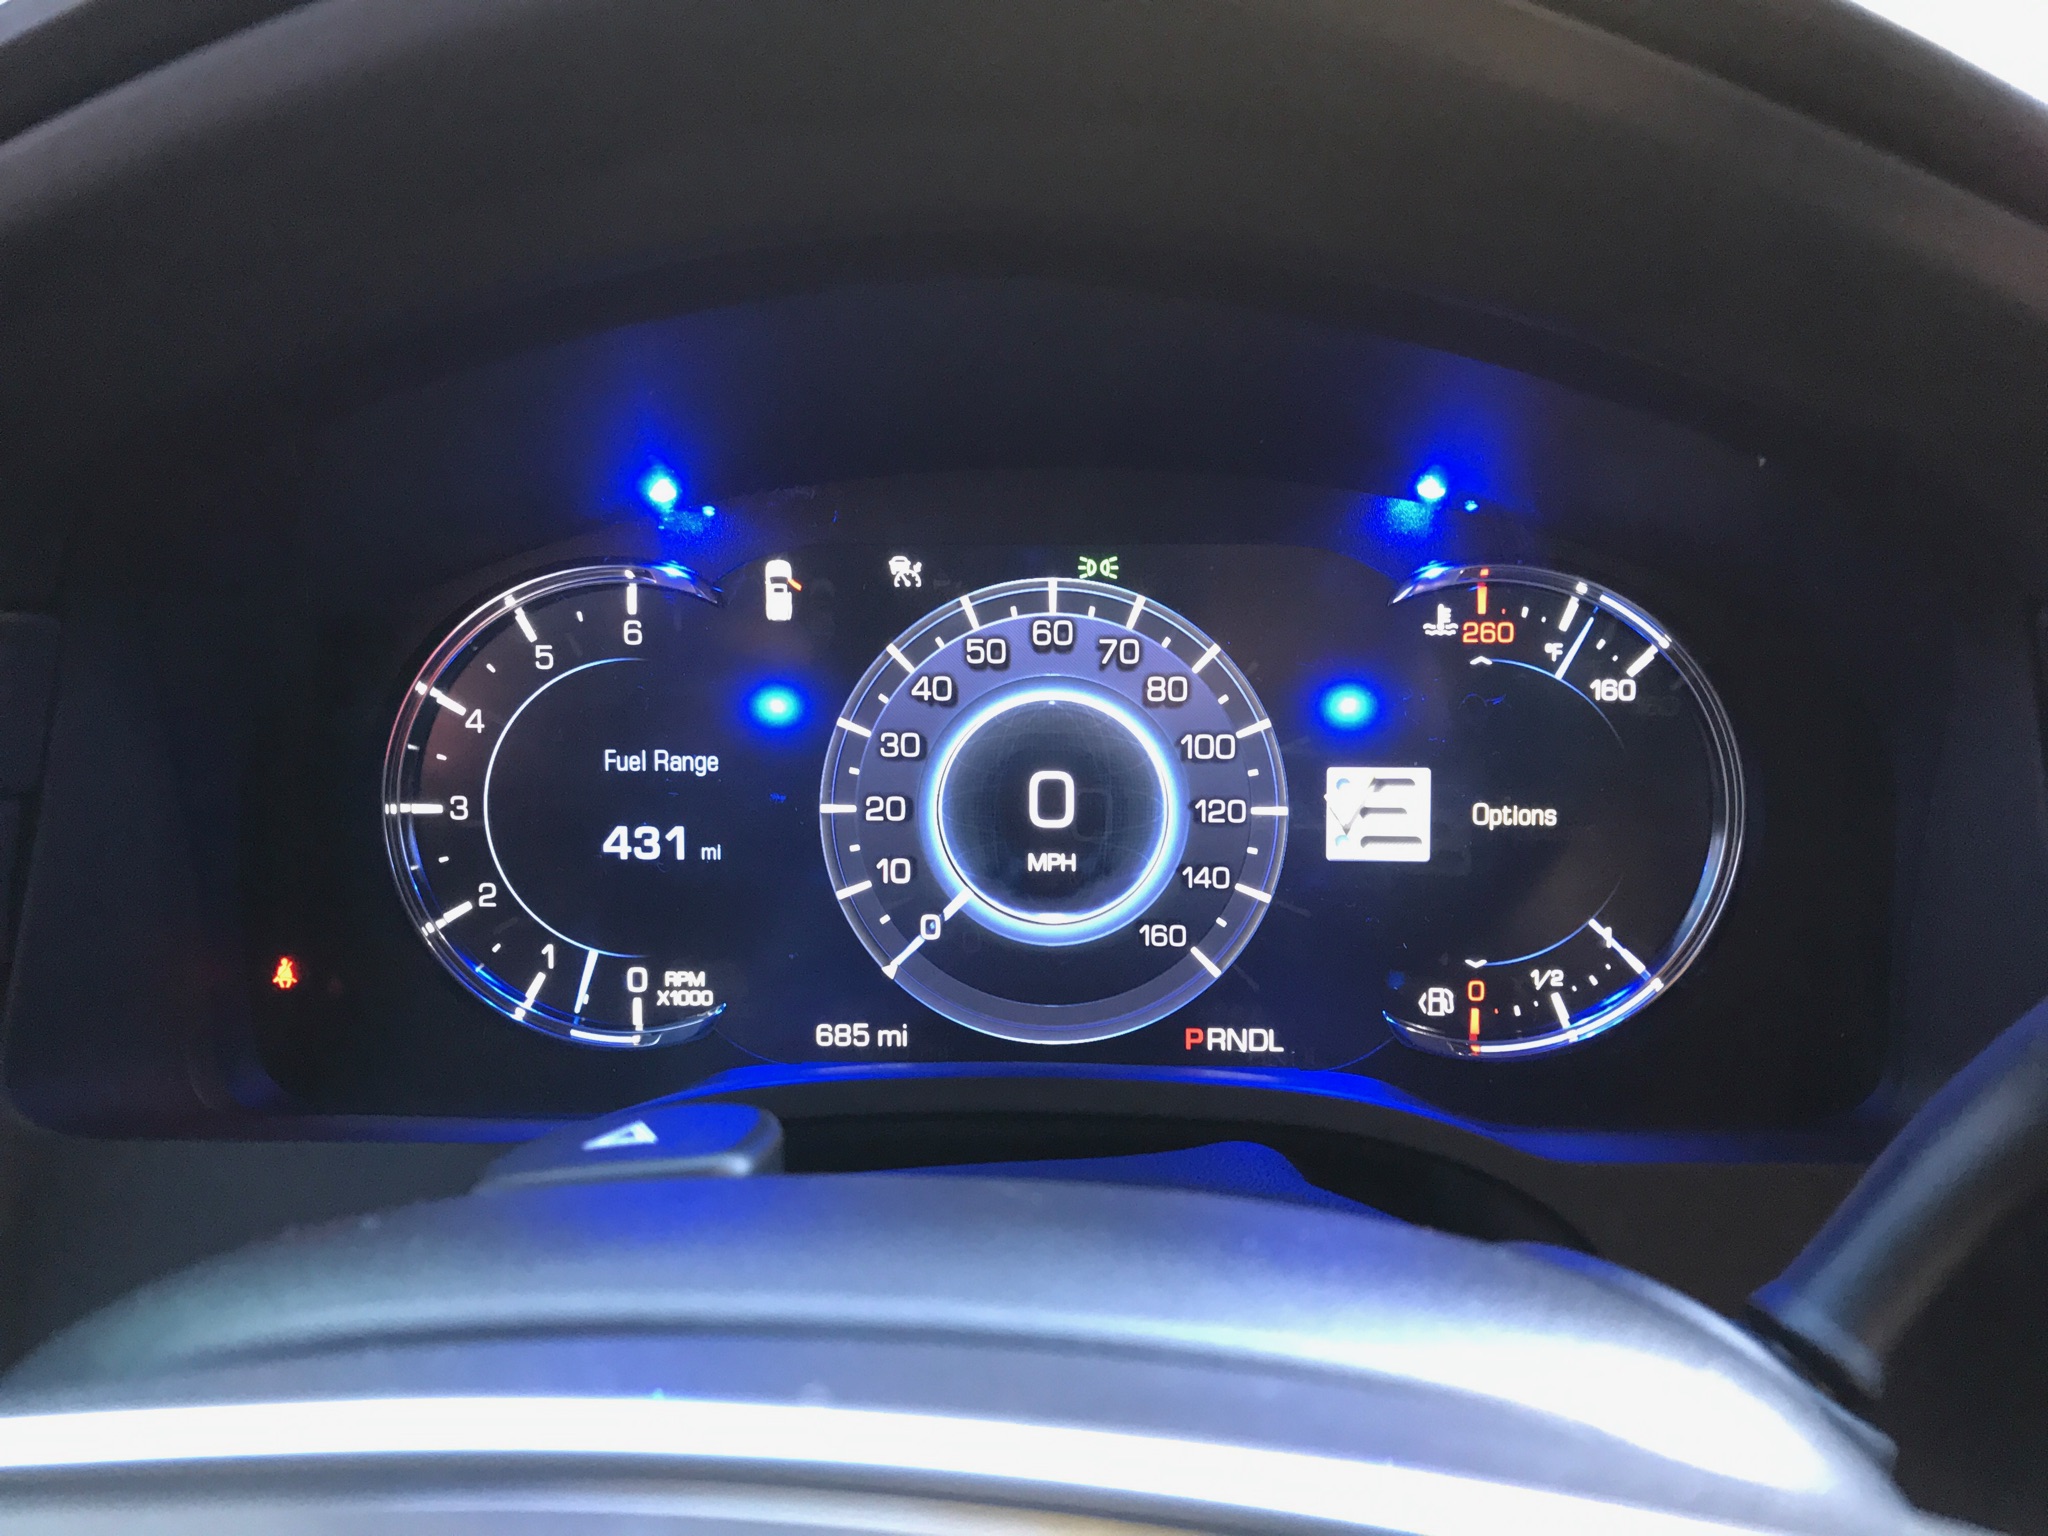 K40 Custom Installed Radar Detector and Police Laser Jammer Alert LED's In 2017 Cadillac Escalade In Lake Charles, LA